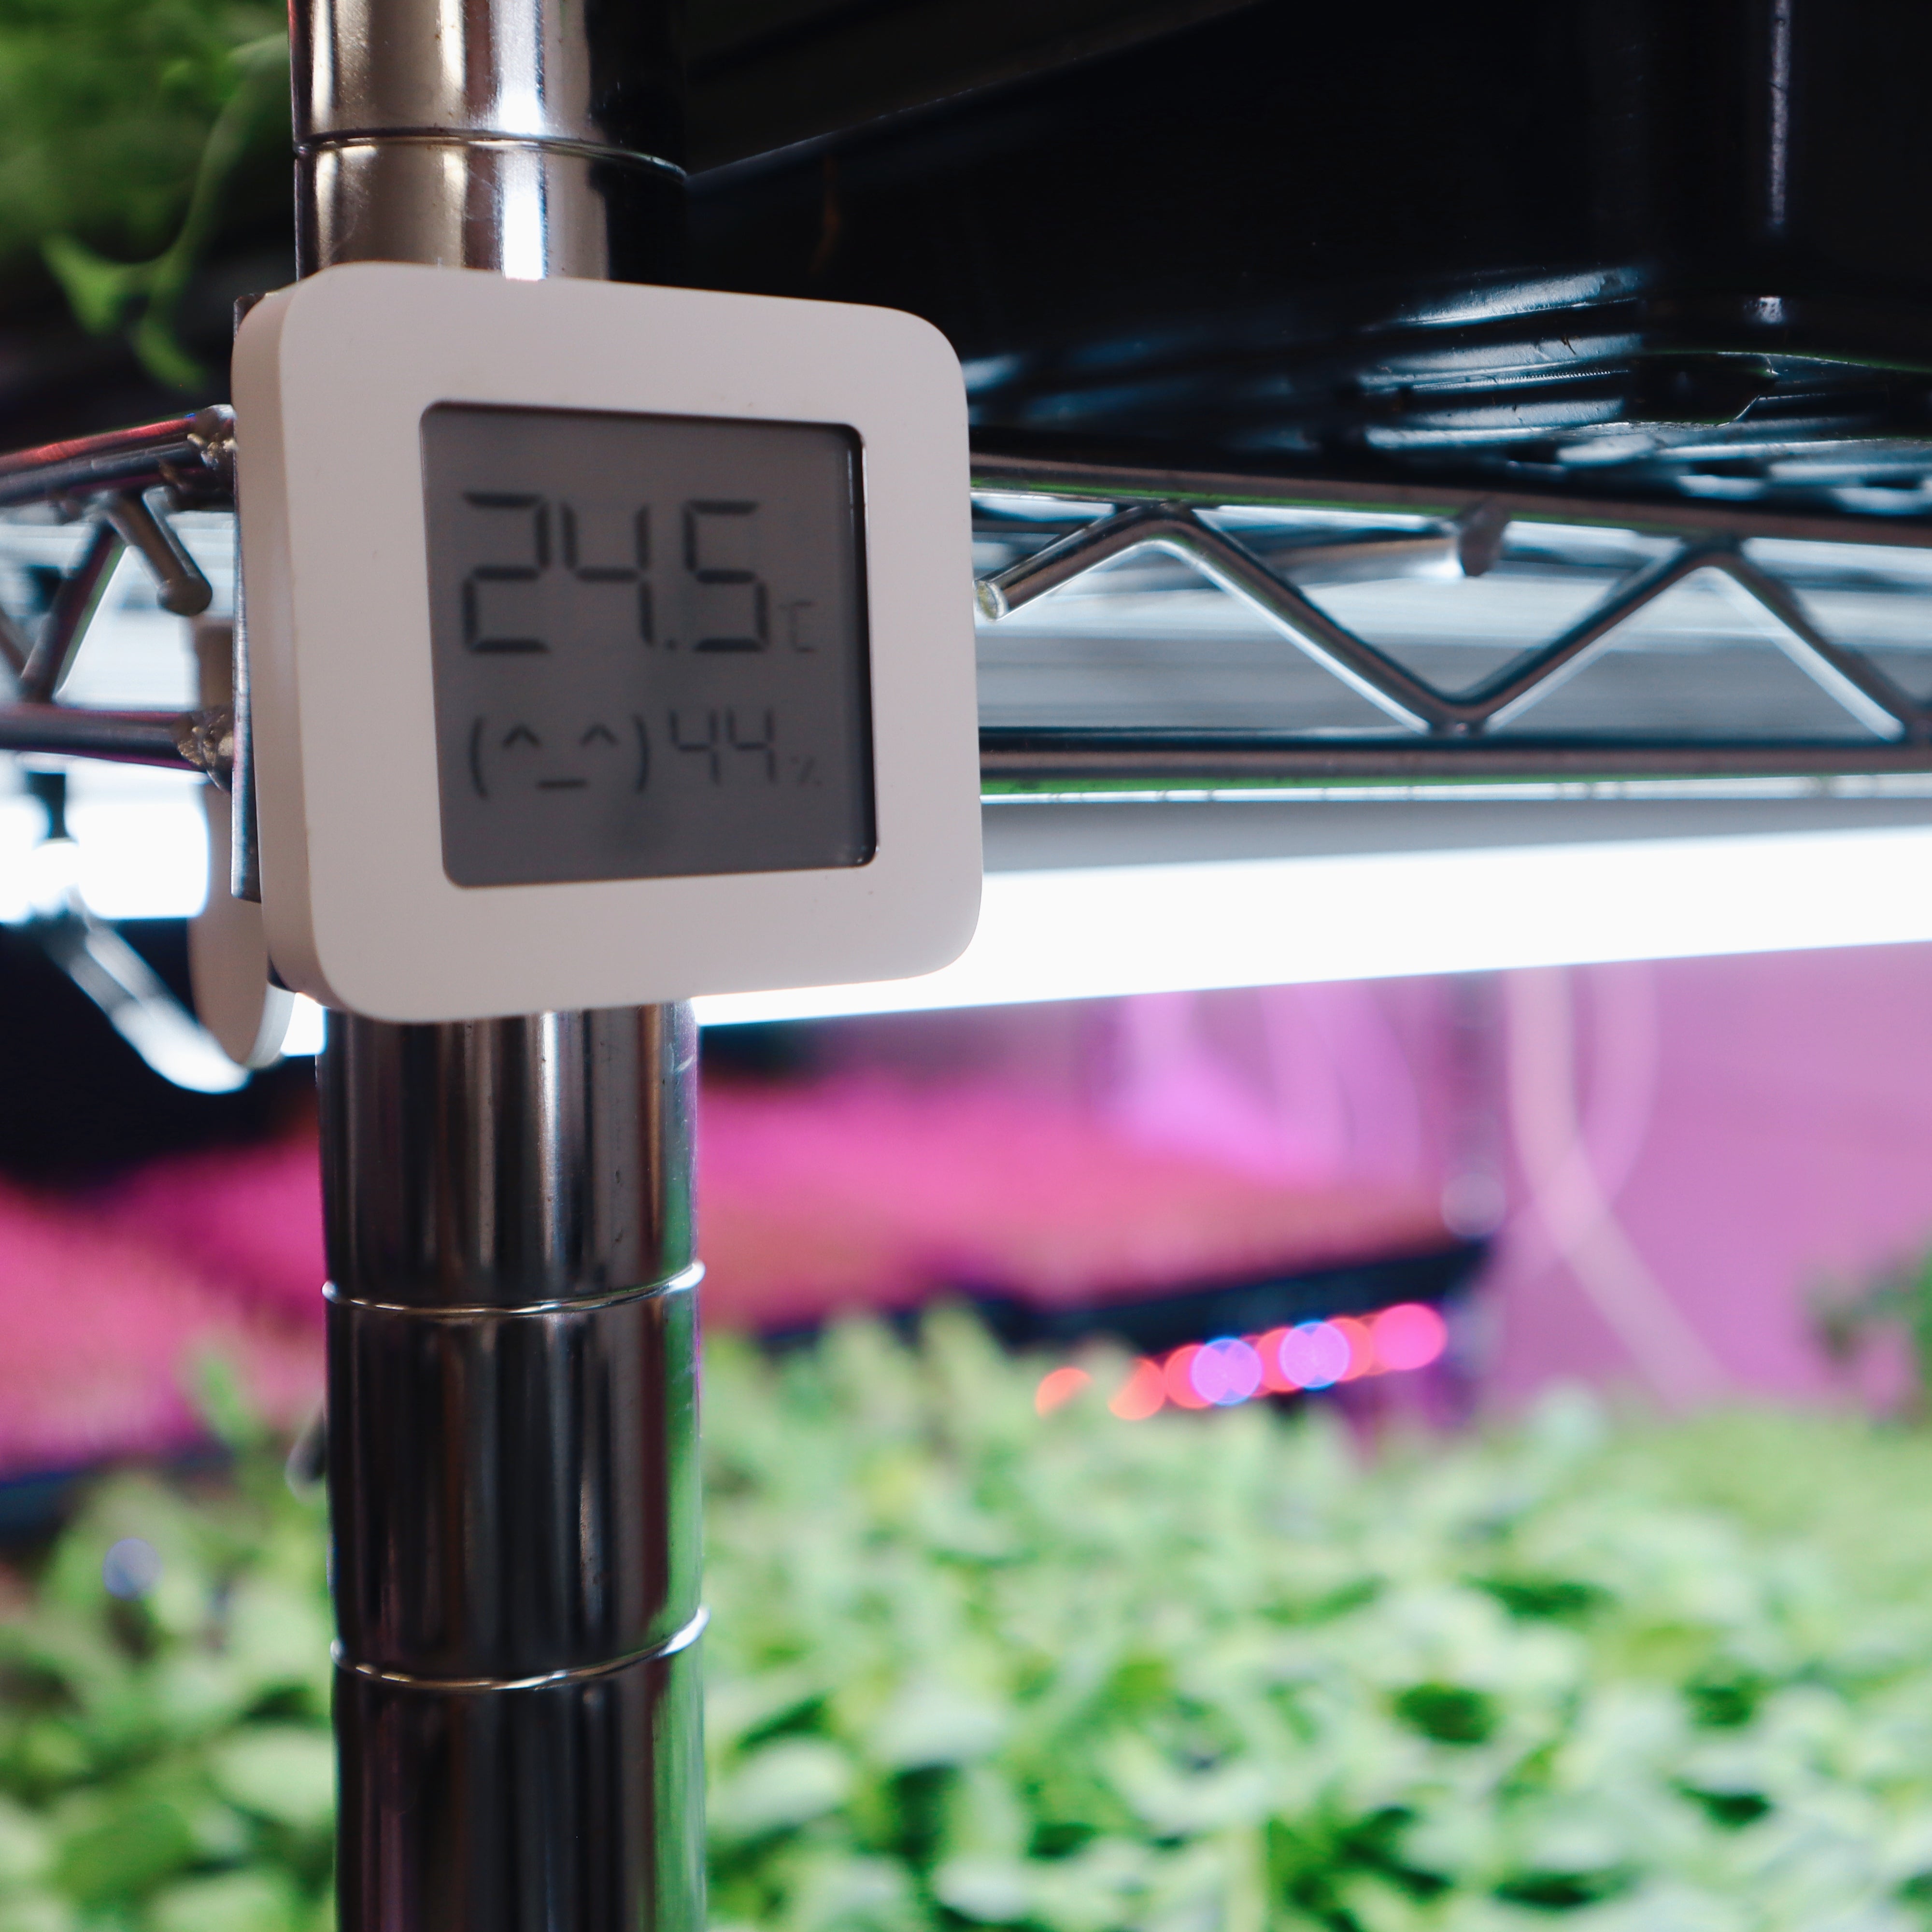 LCD Digital Thermometer Hygrometer Indoor Temperature Humidity Meter Gauge